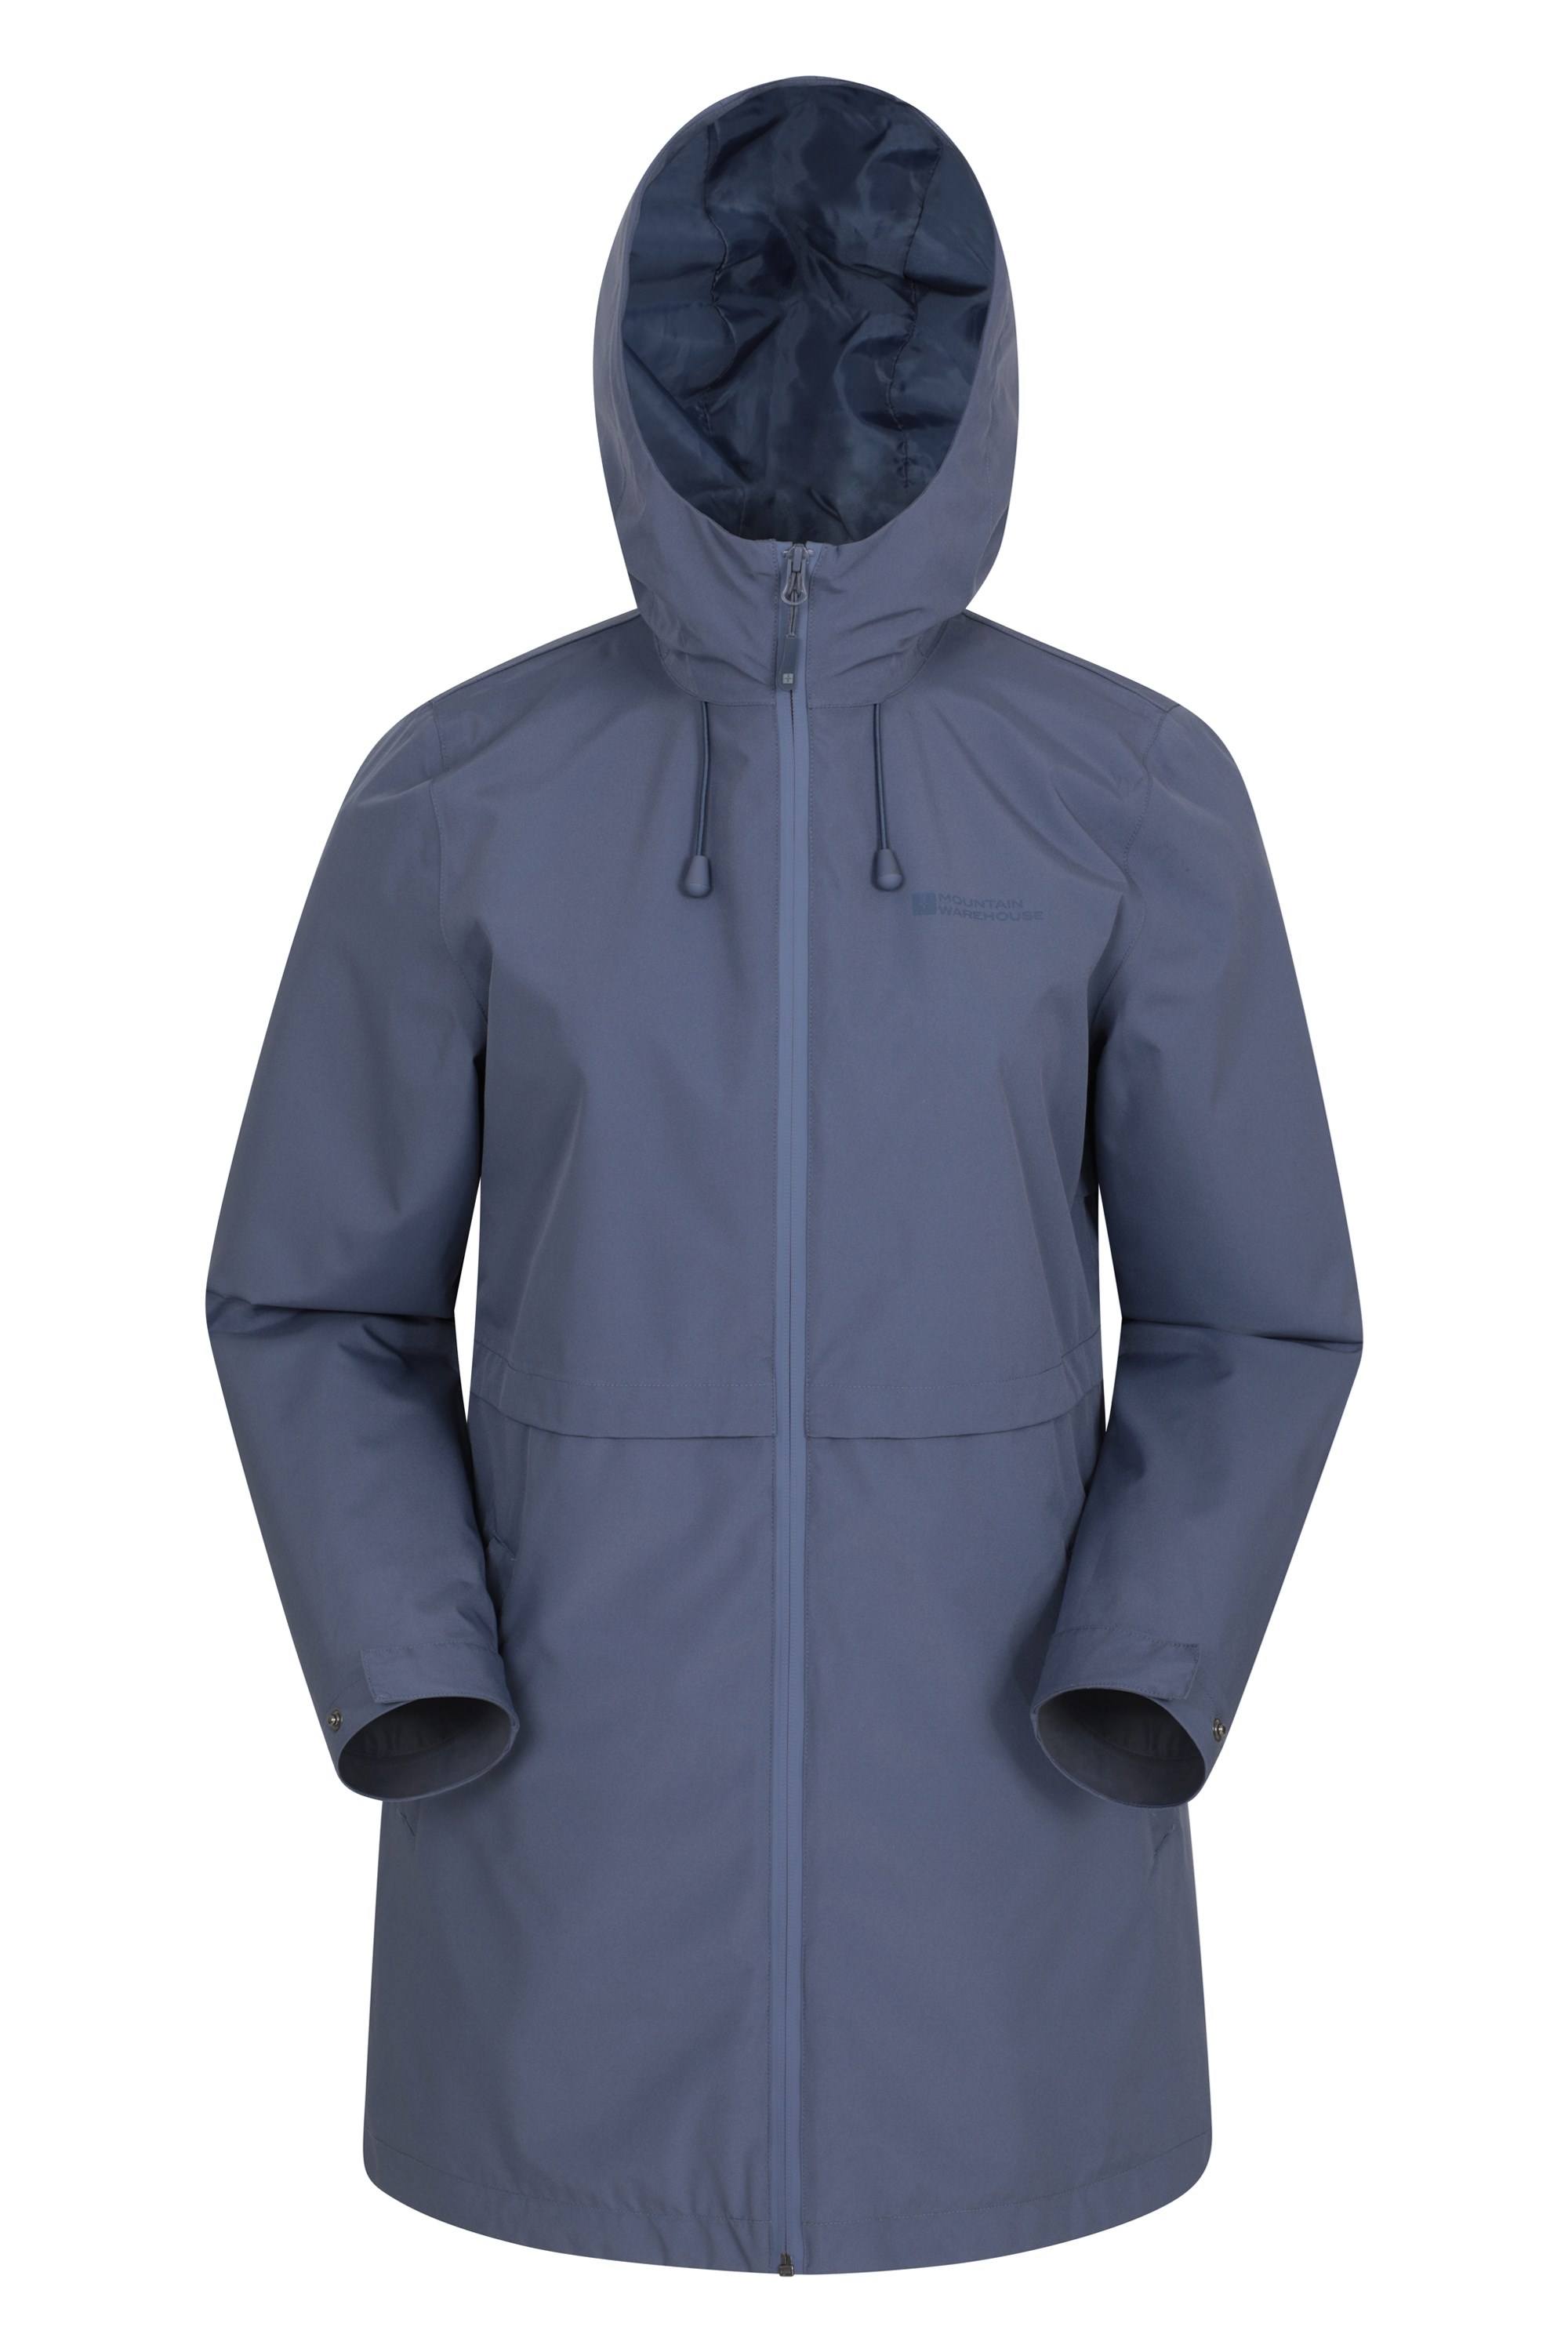 Hilltop Womens Waterproof Jacket 